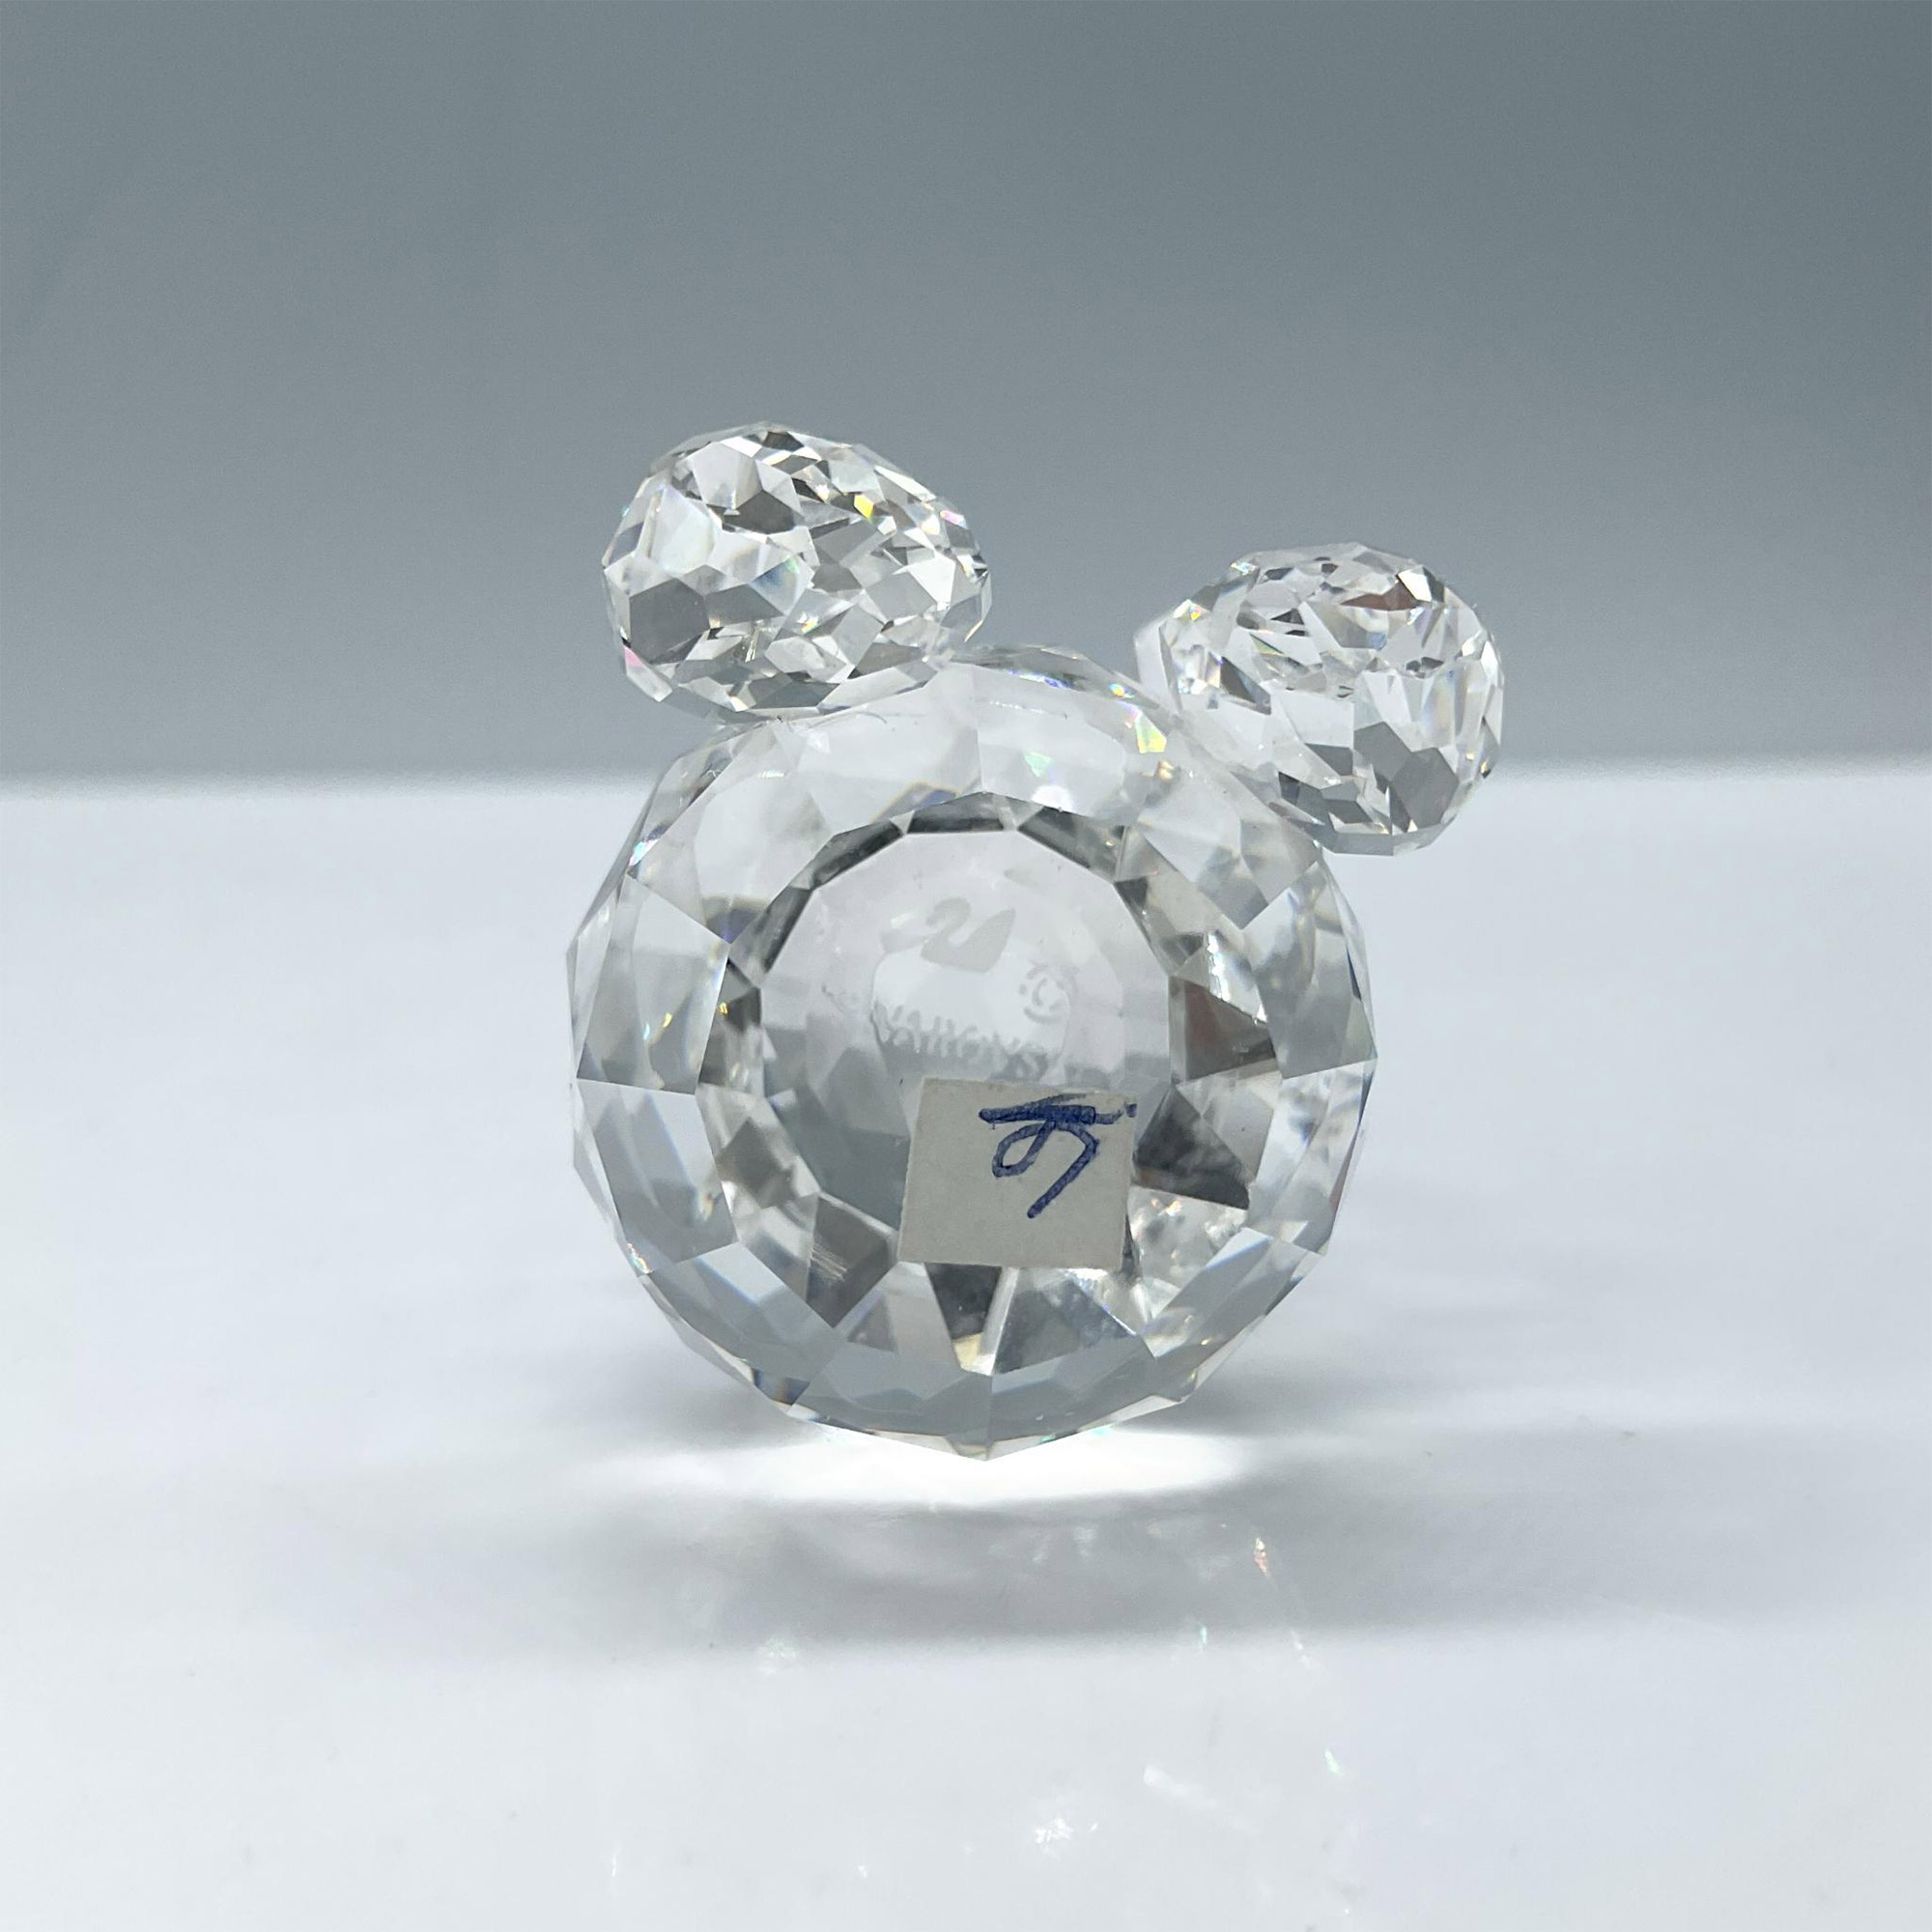 Swarovski Crystal Figurine, Teddy Bear - Image 3 of 4